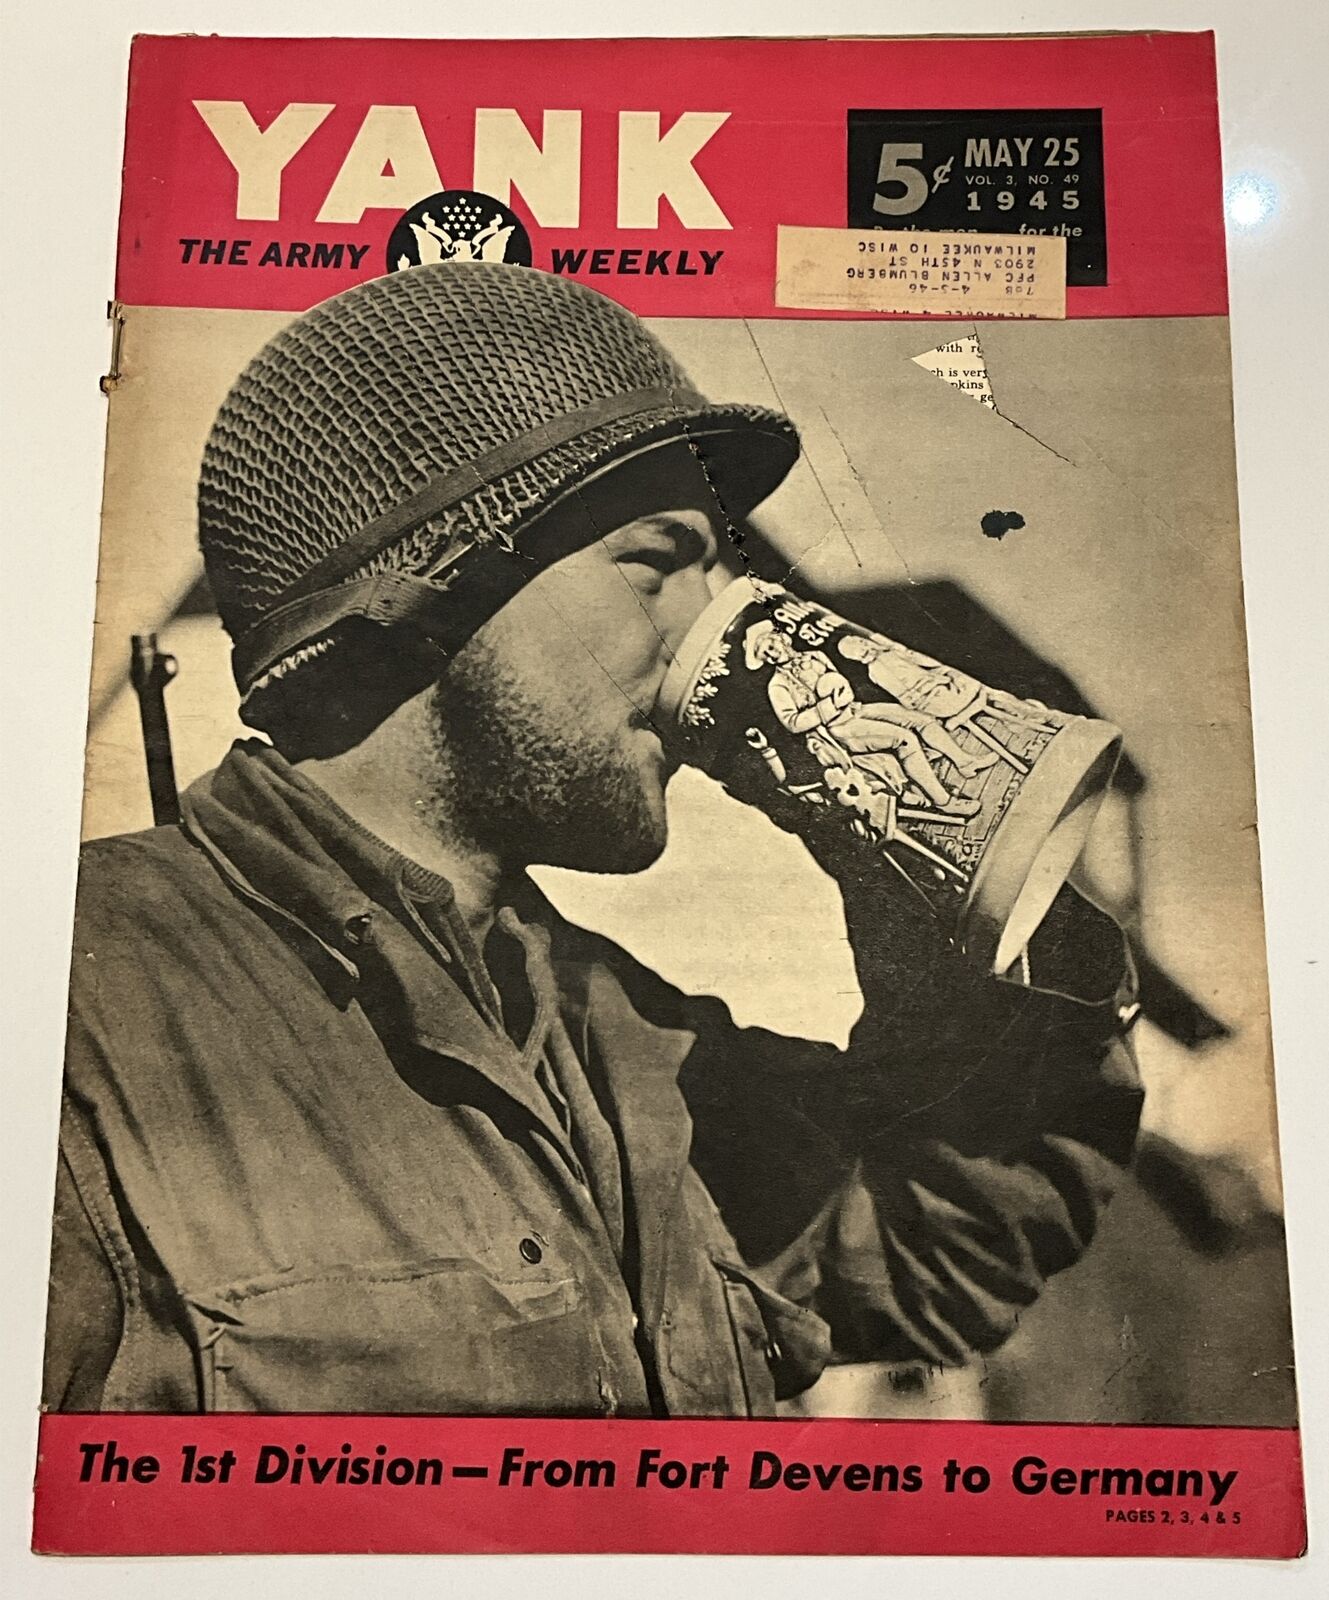 Original WWII U.S. Amry Yank The Army Weekly Magazine May 25, 1945 Vol. 3 No. 49